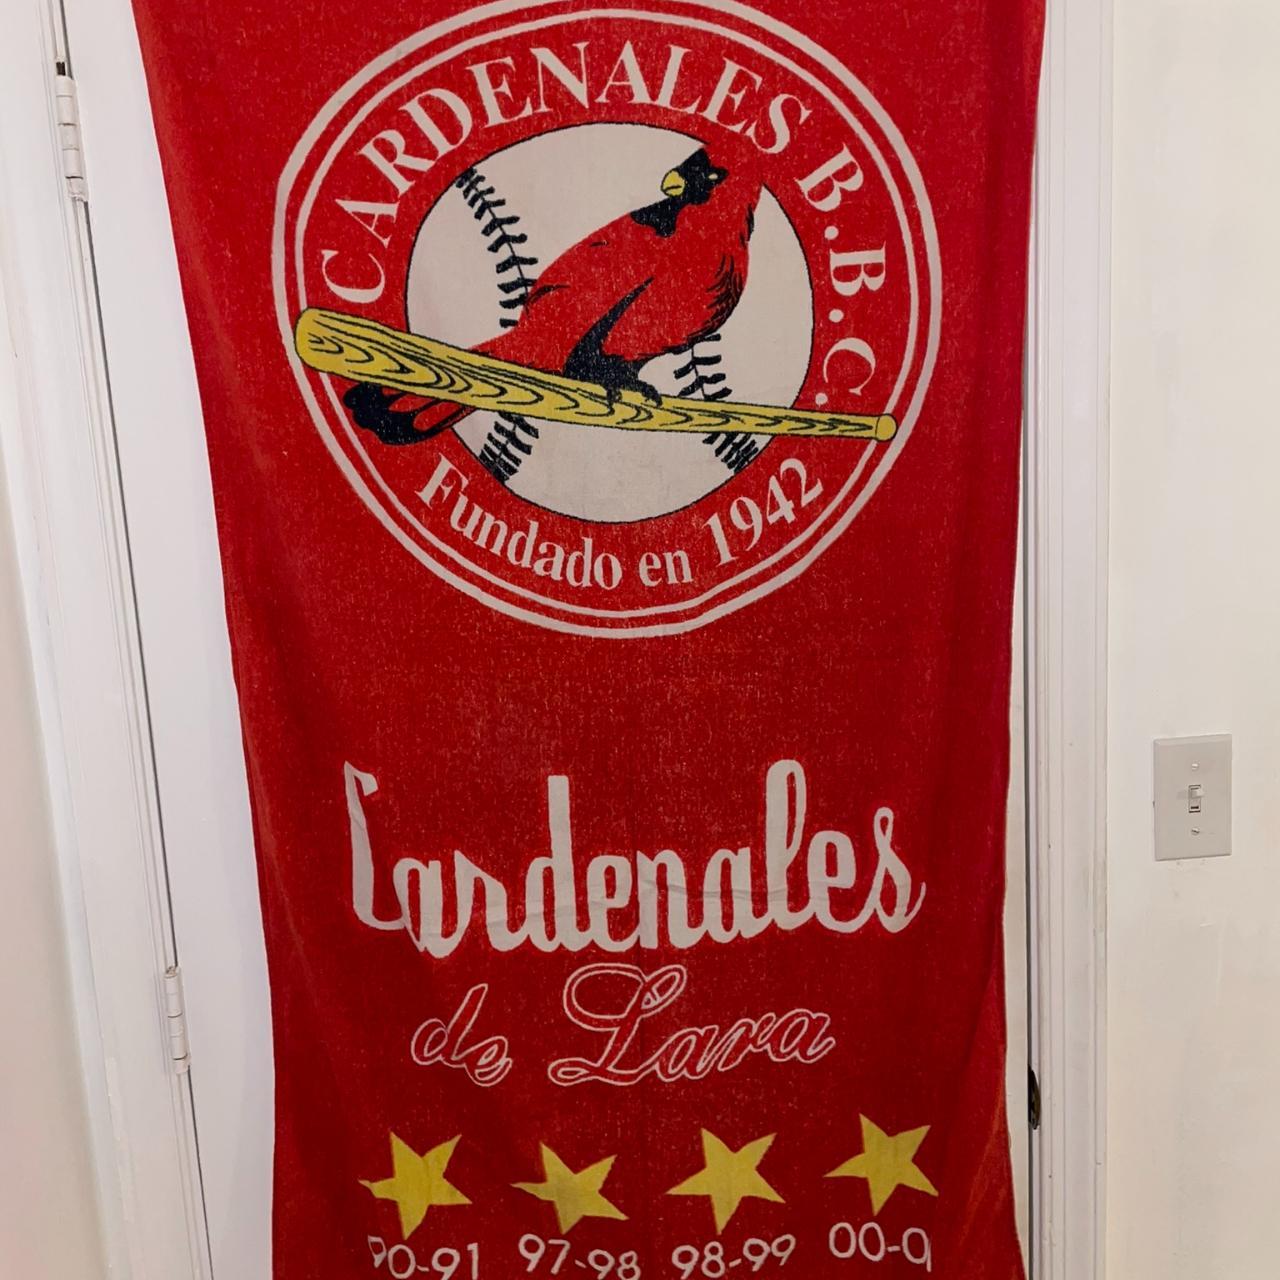 st louis cardinals beach towel